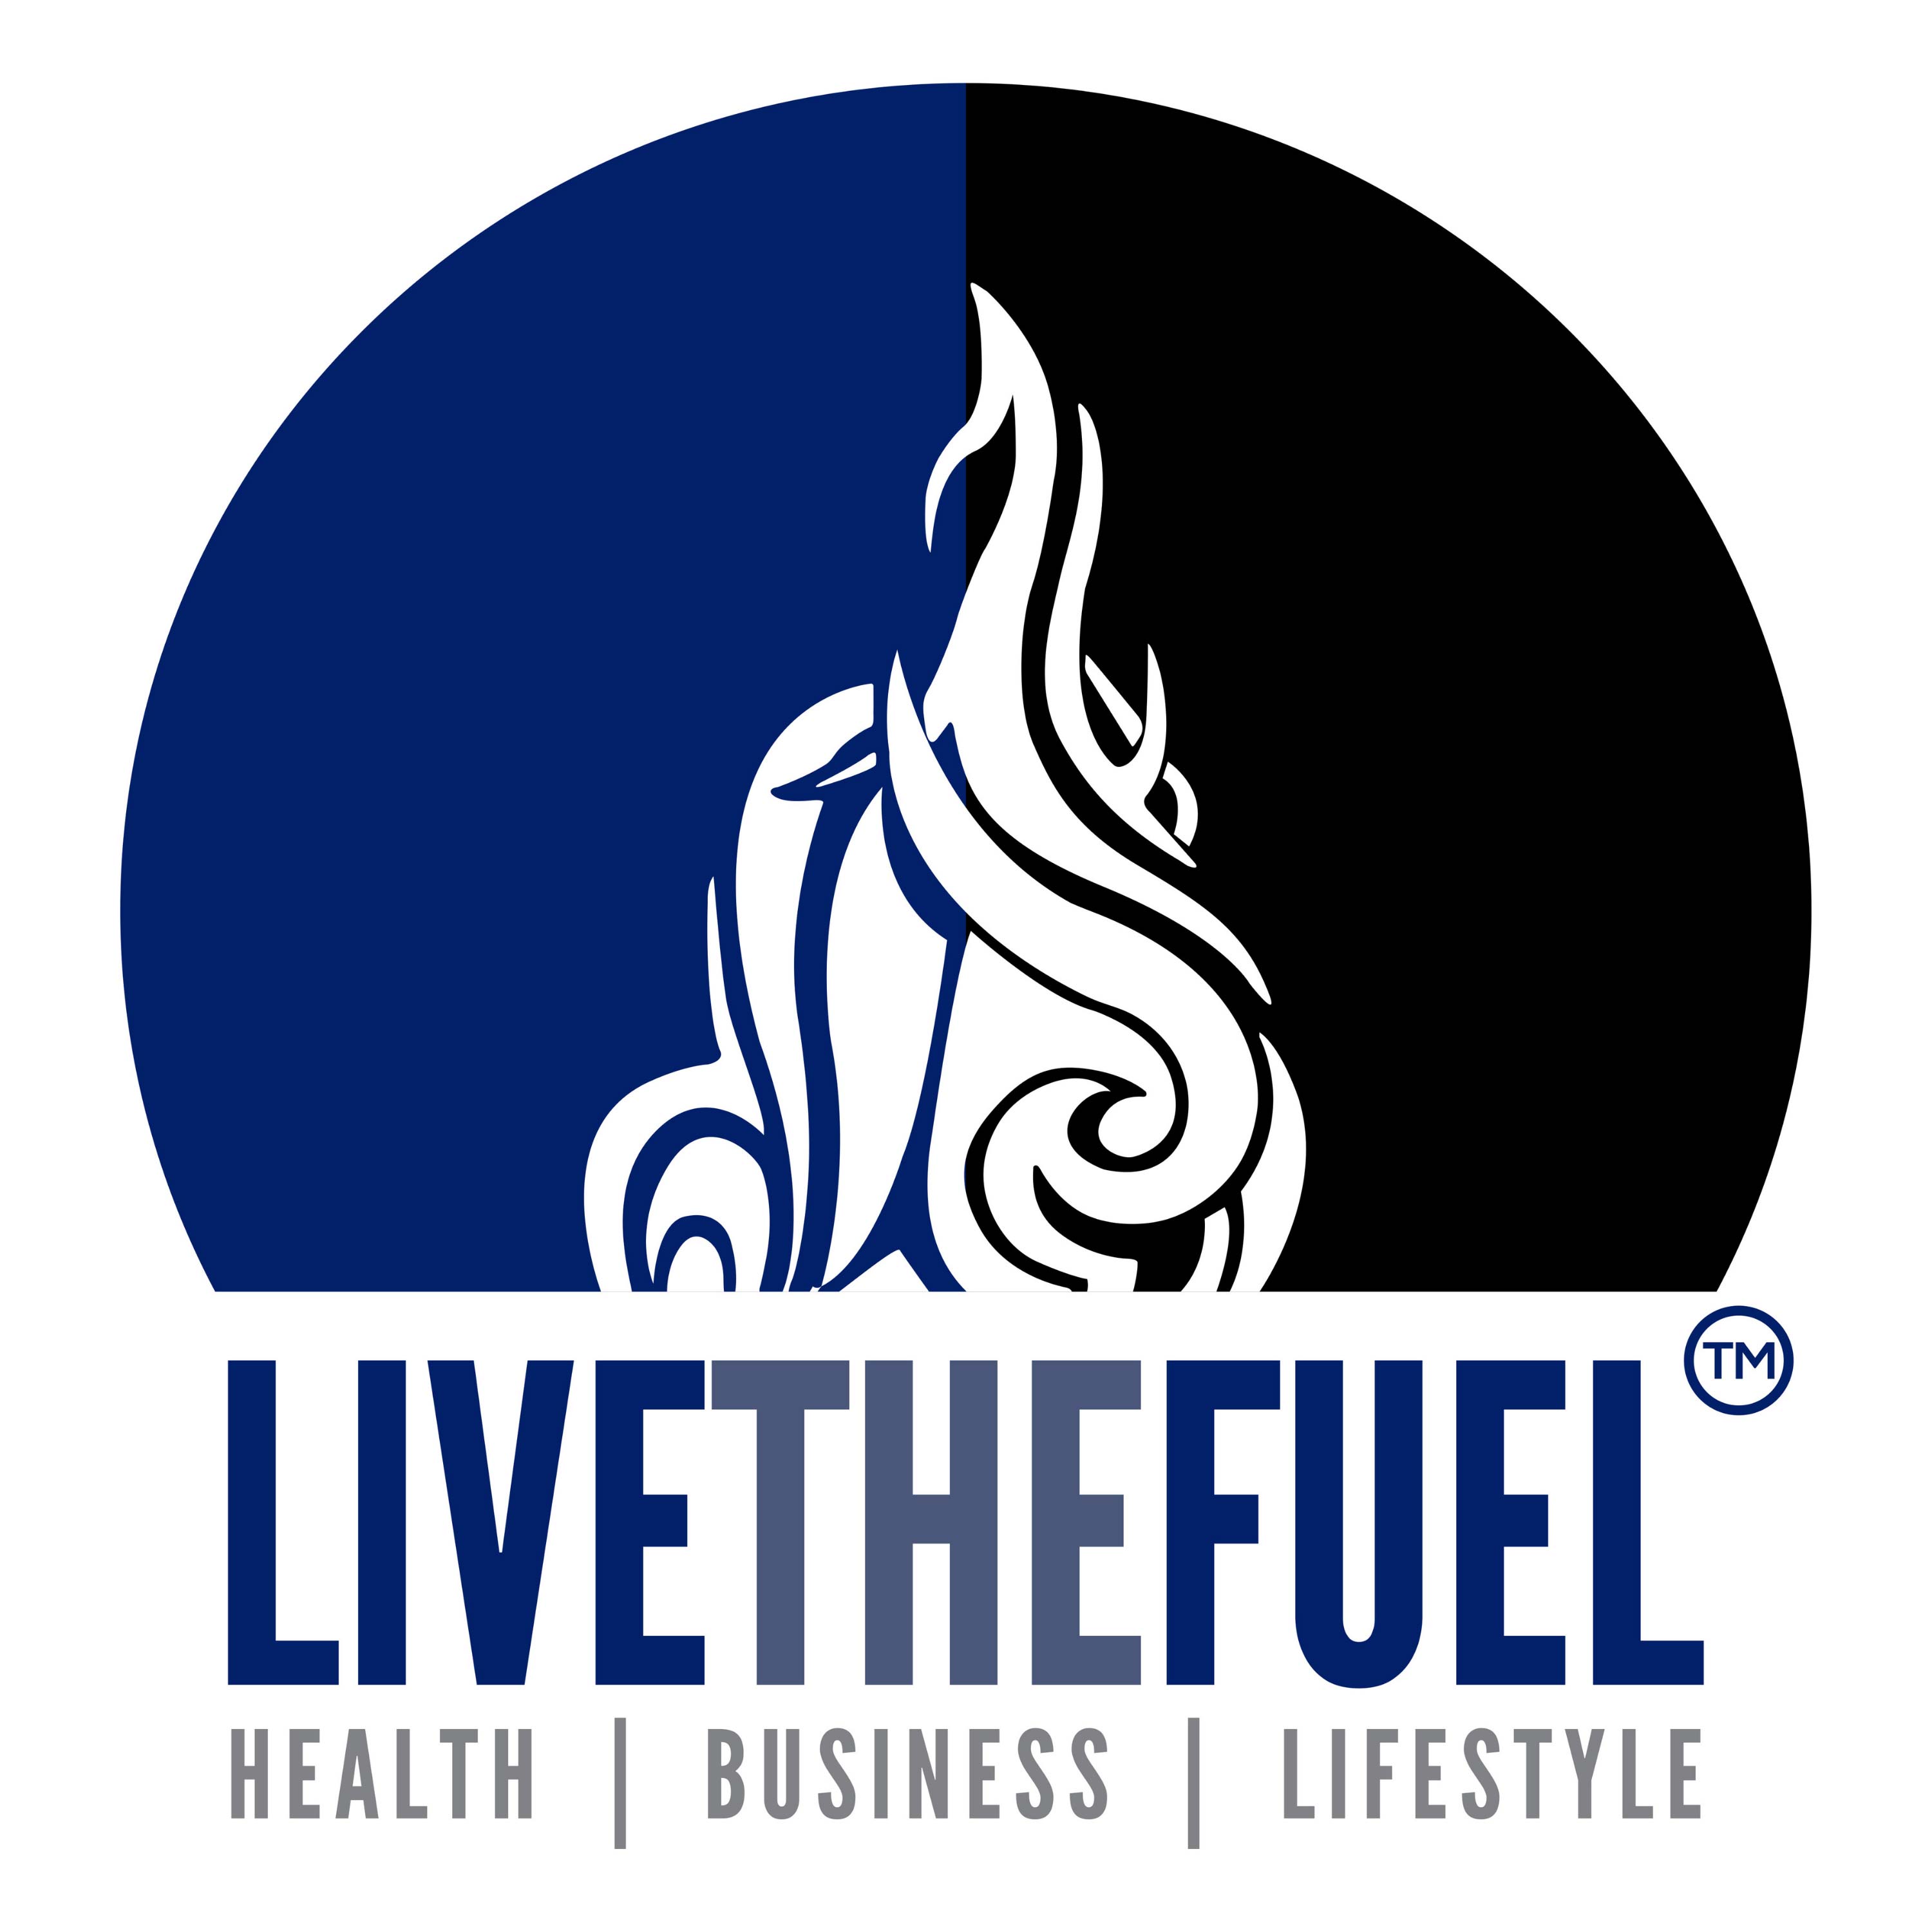 LIVETHEFUEL - Health, Business, Lifestyle